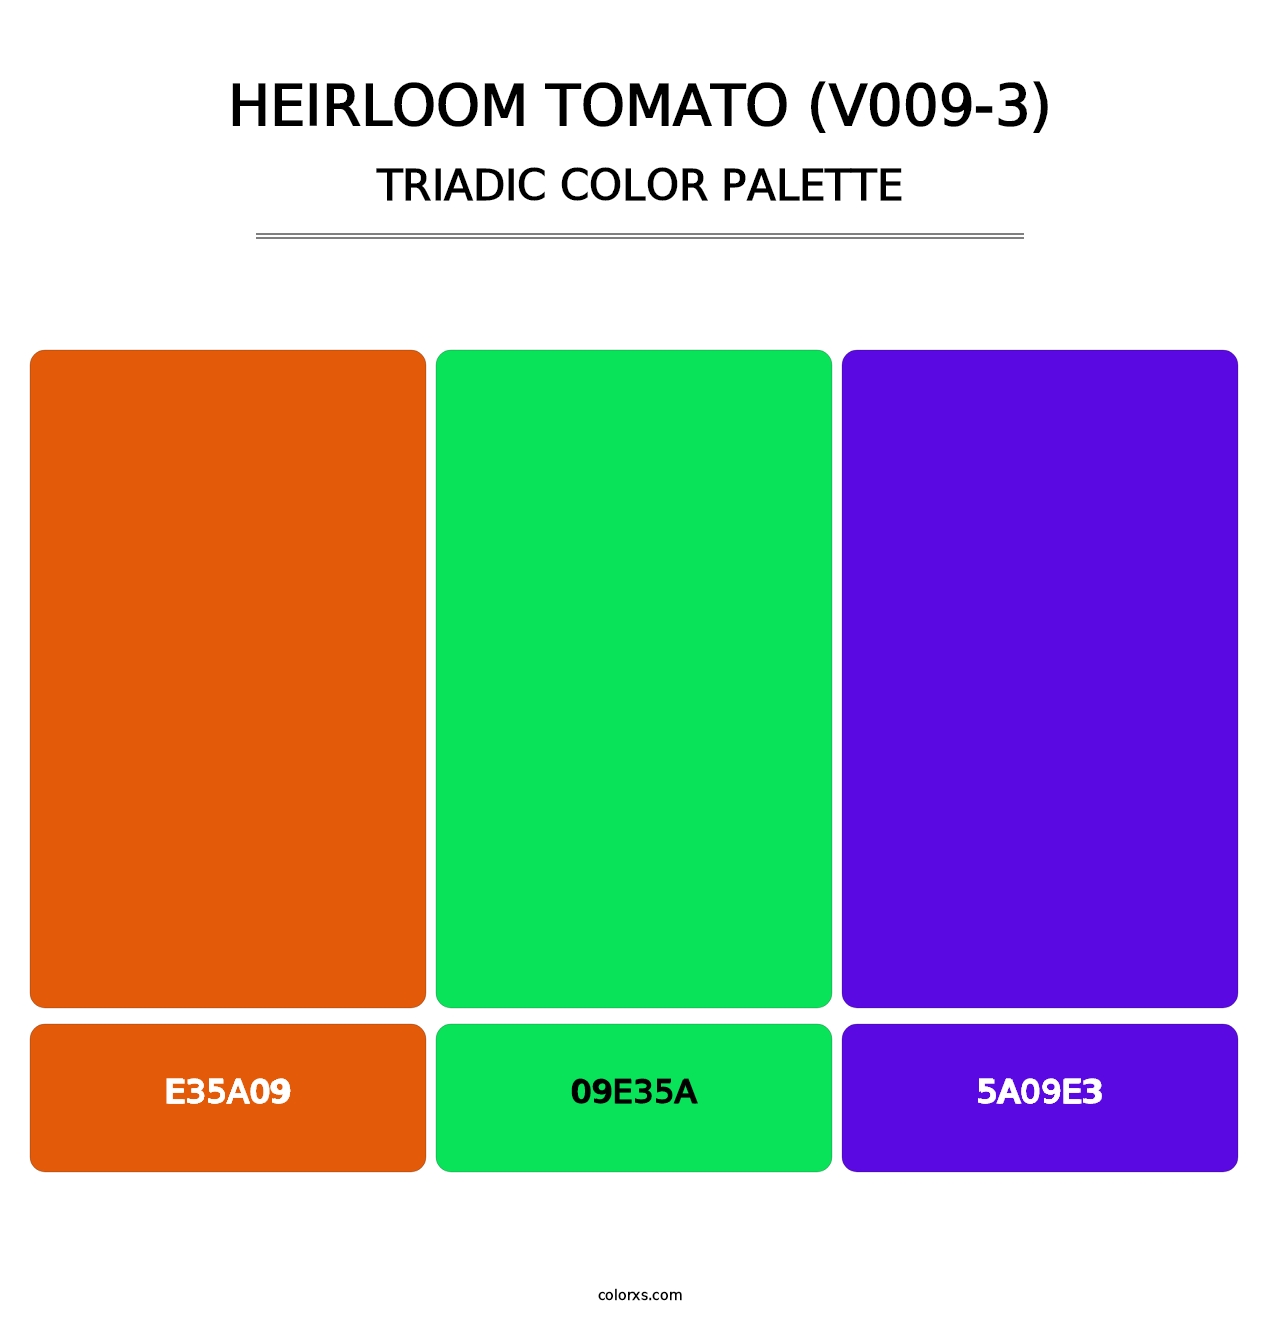 Heirloom Tomato (V009-3) - Triadic Color Palette